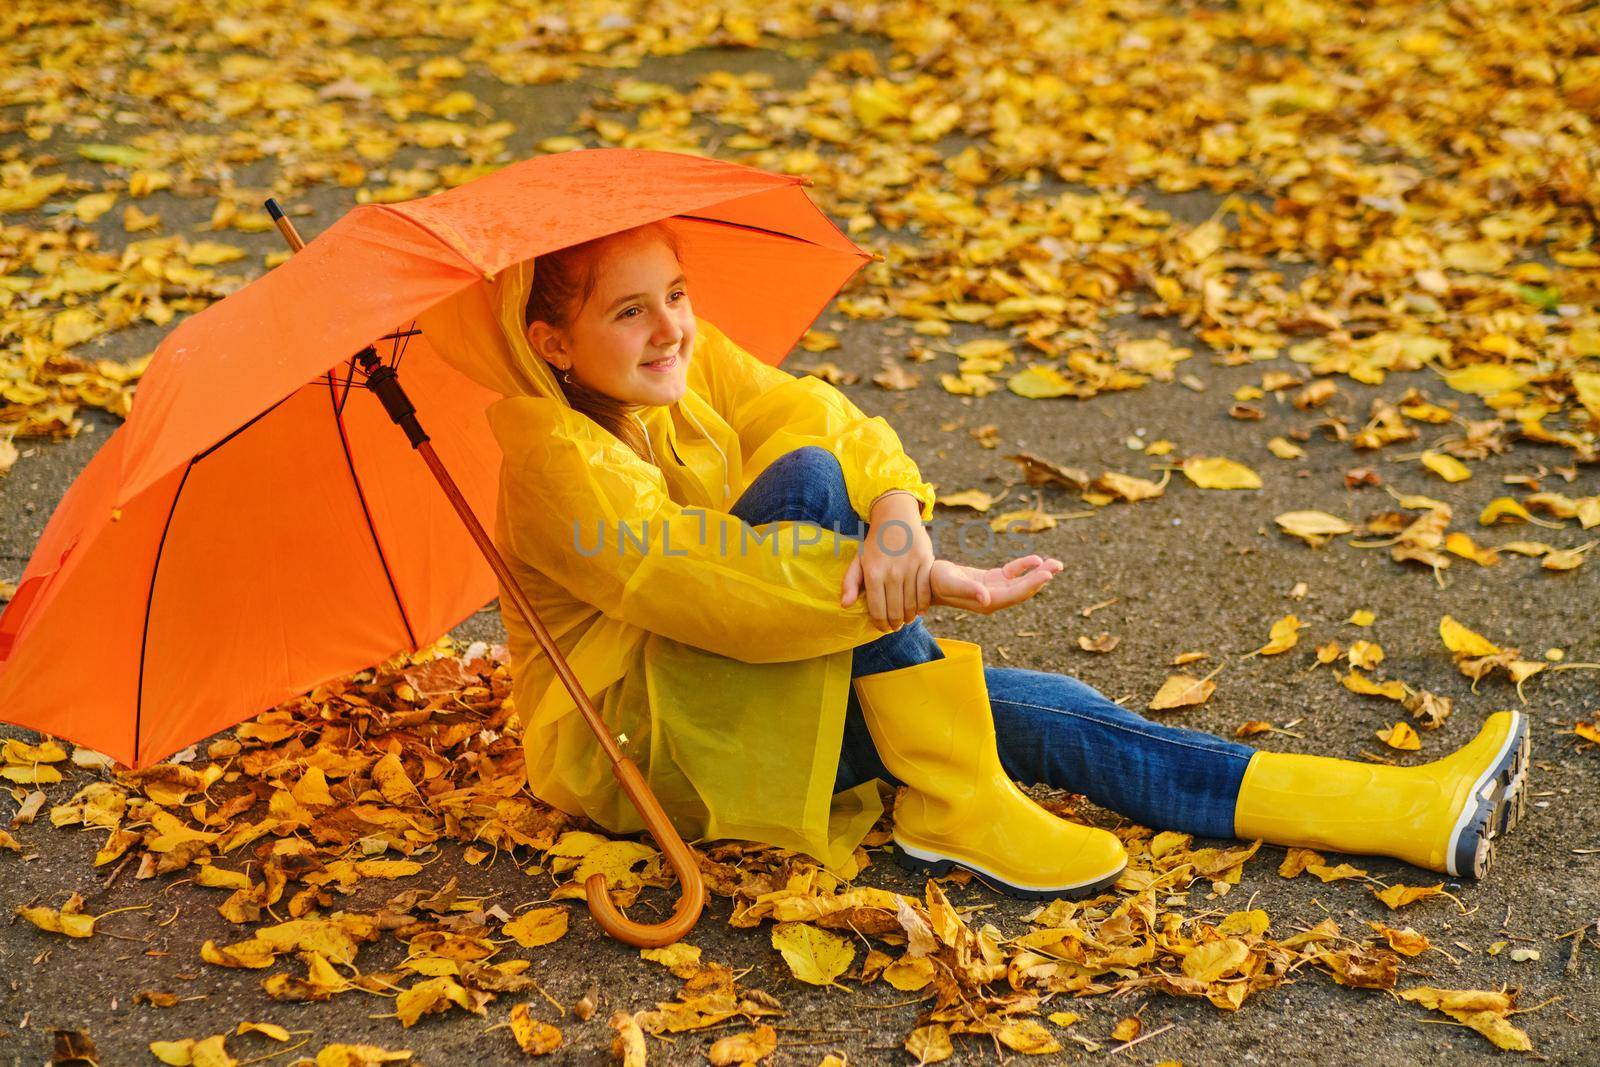 Happy kid Sits under an orange umbrella in the autumn park catching rain drops